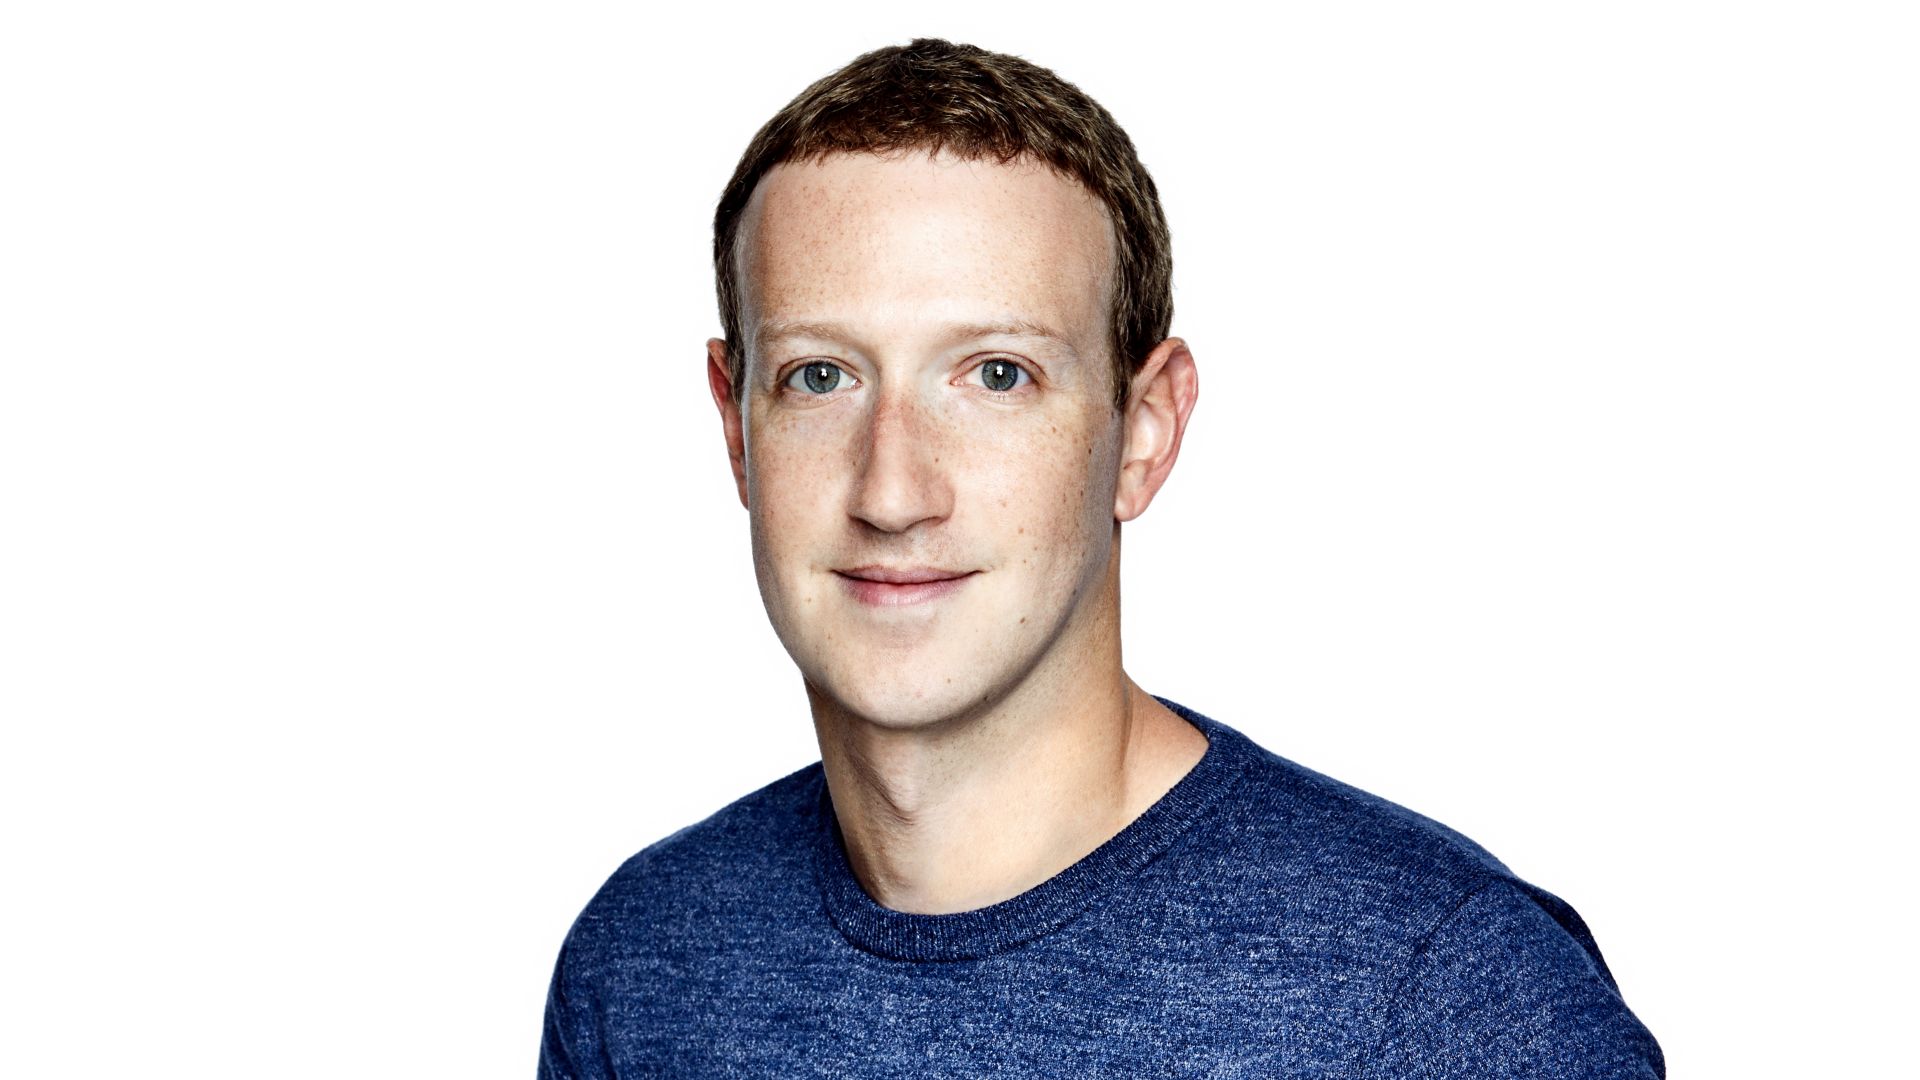 Marck Zuckerberg